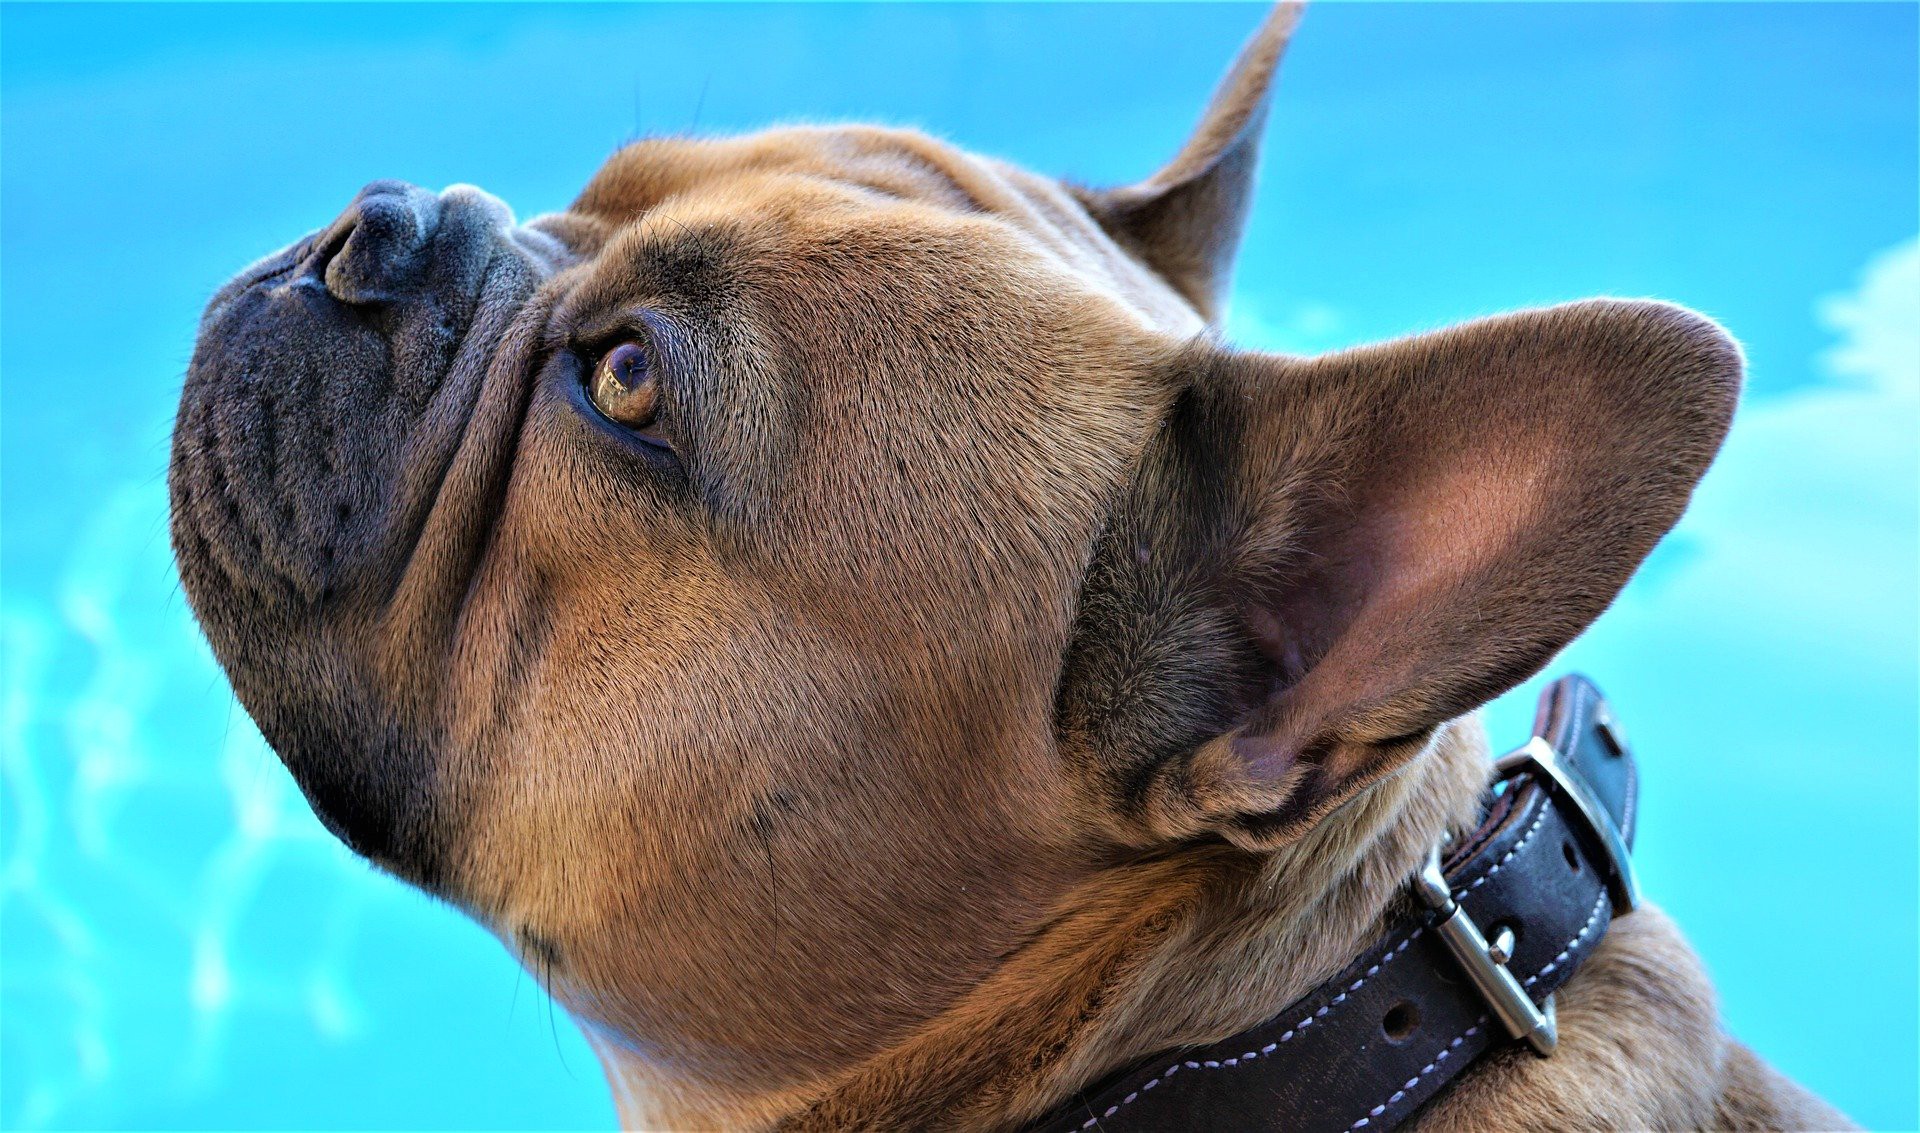 <img src="bulldog.jpg" bulldog how pets can boost your mental health"/> 